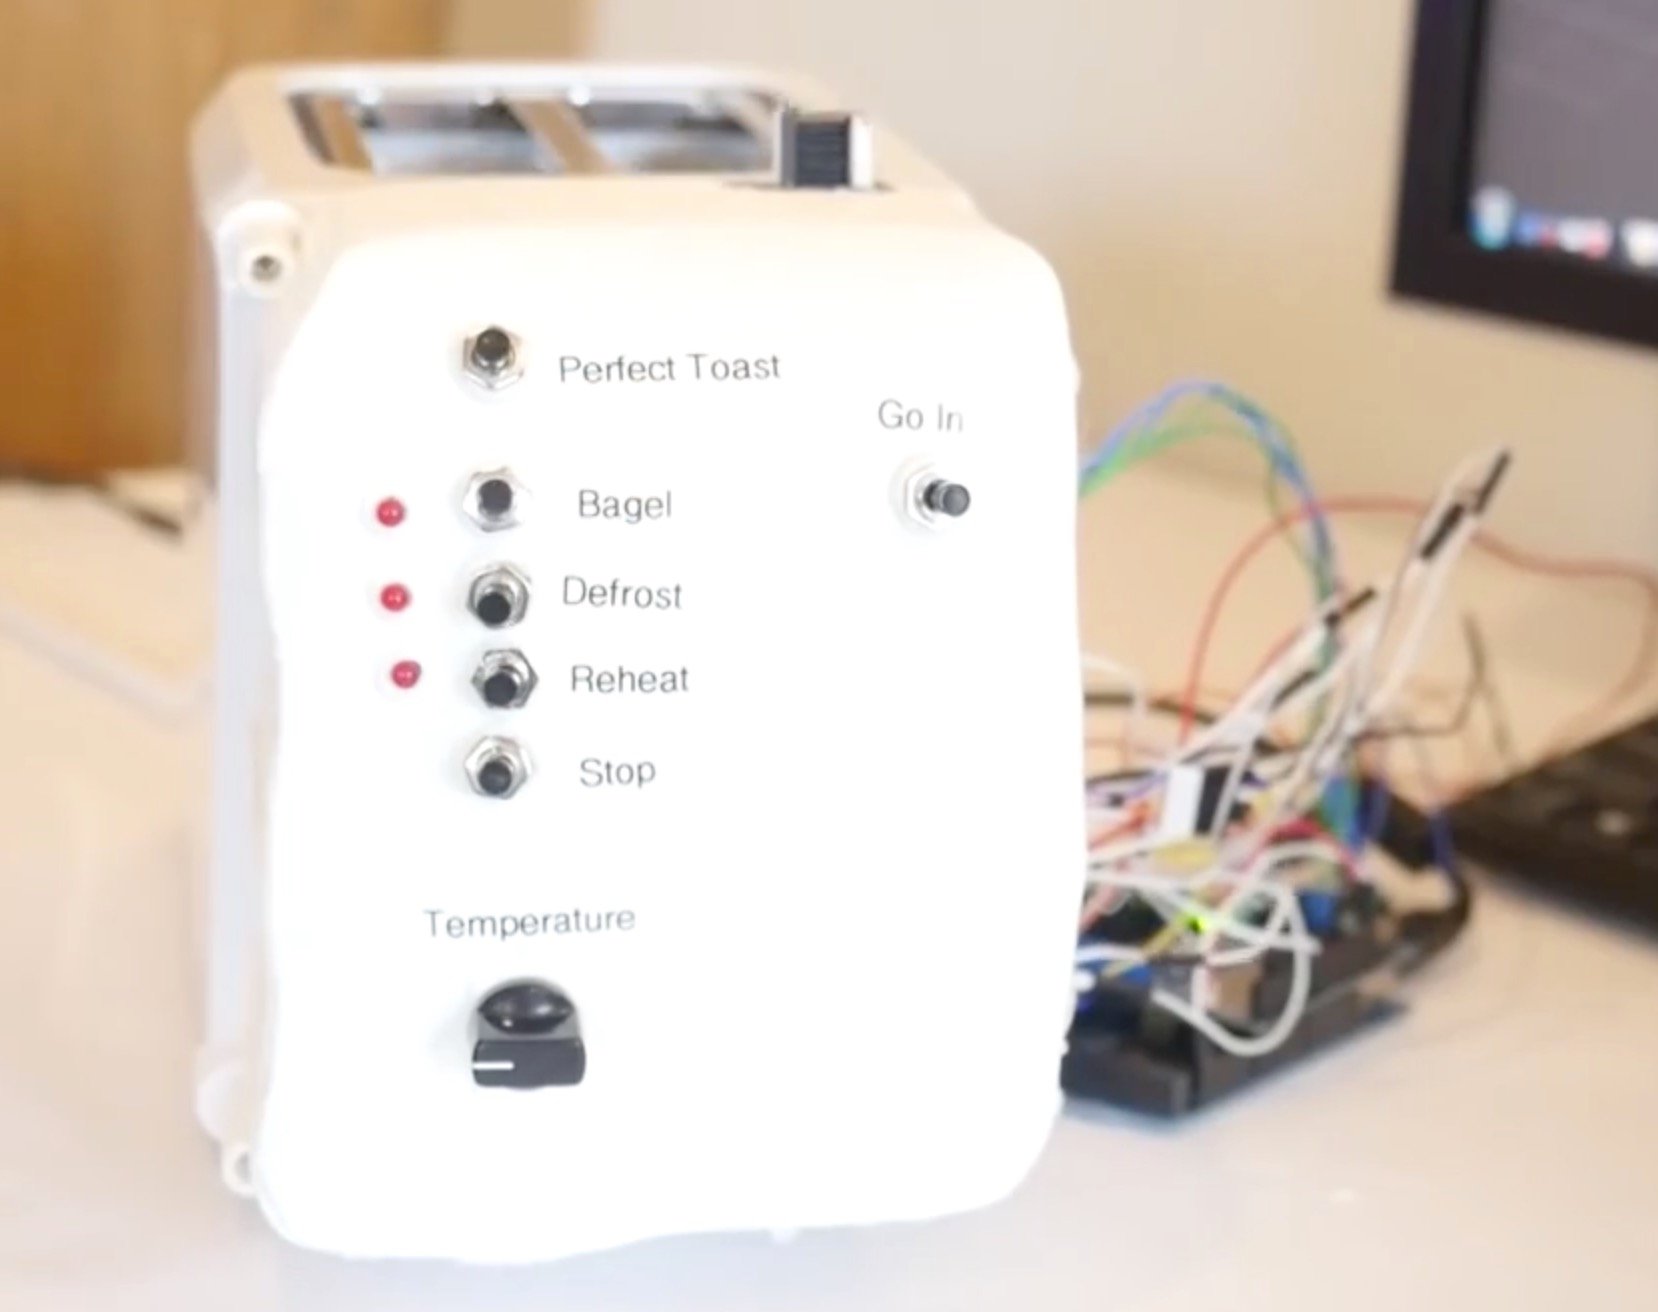  RetroFab-generated customized toaster controls 